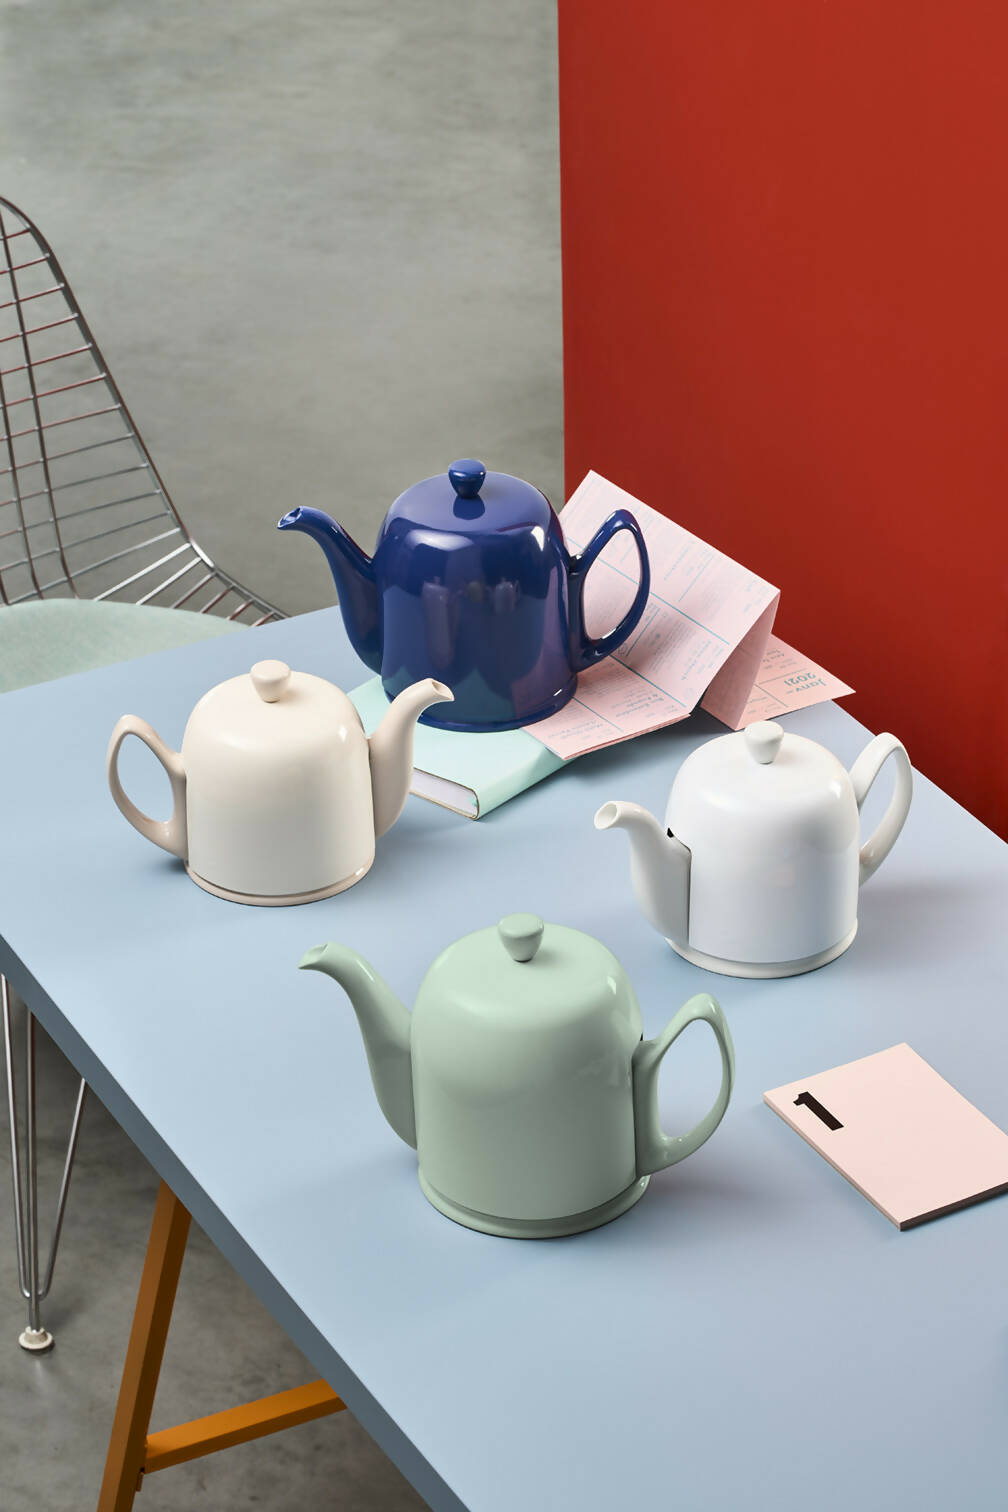 Guy Degrenne Salam Insulated Teapot